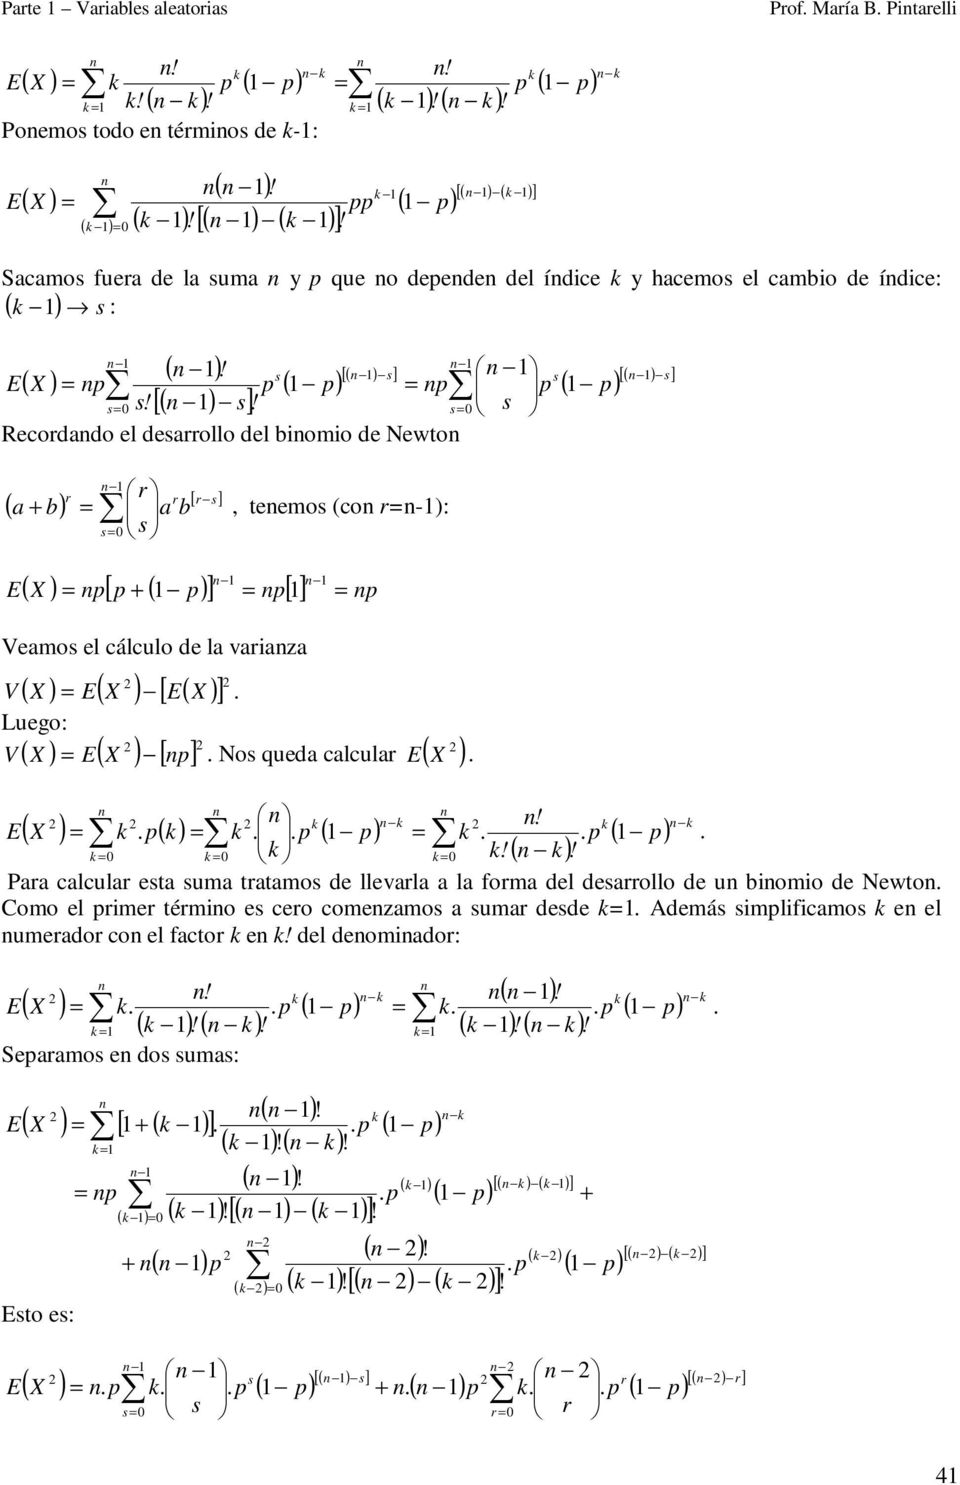 biomio d wto s [ s ] s [ s] r s s r r [ rs] a b a b, tmos co r-: [ ] [ ] Vamos l cálculo d la variaza [ ] V. Lugo: V [ ]. os uda calcular.